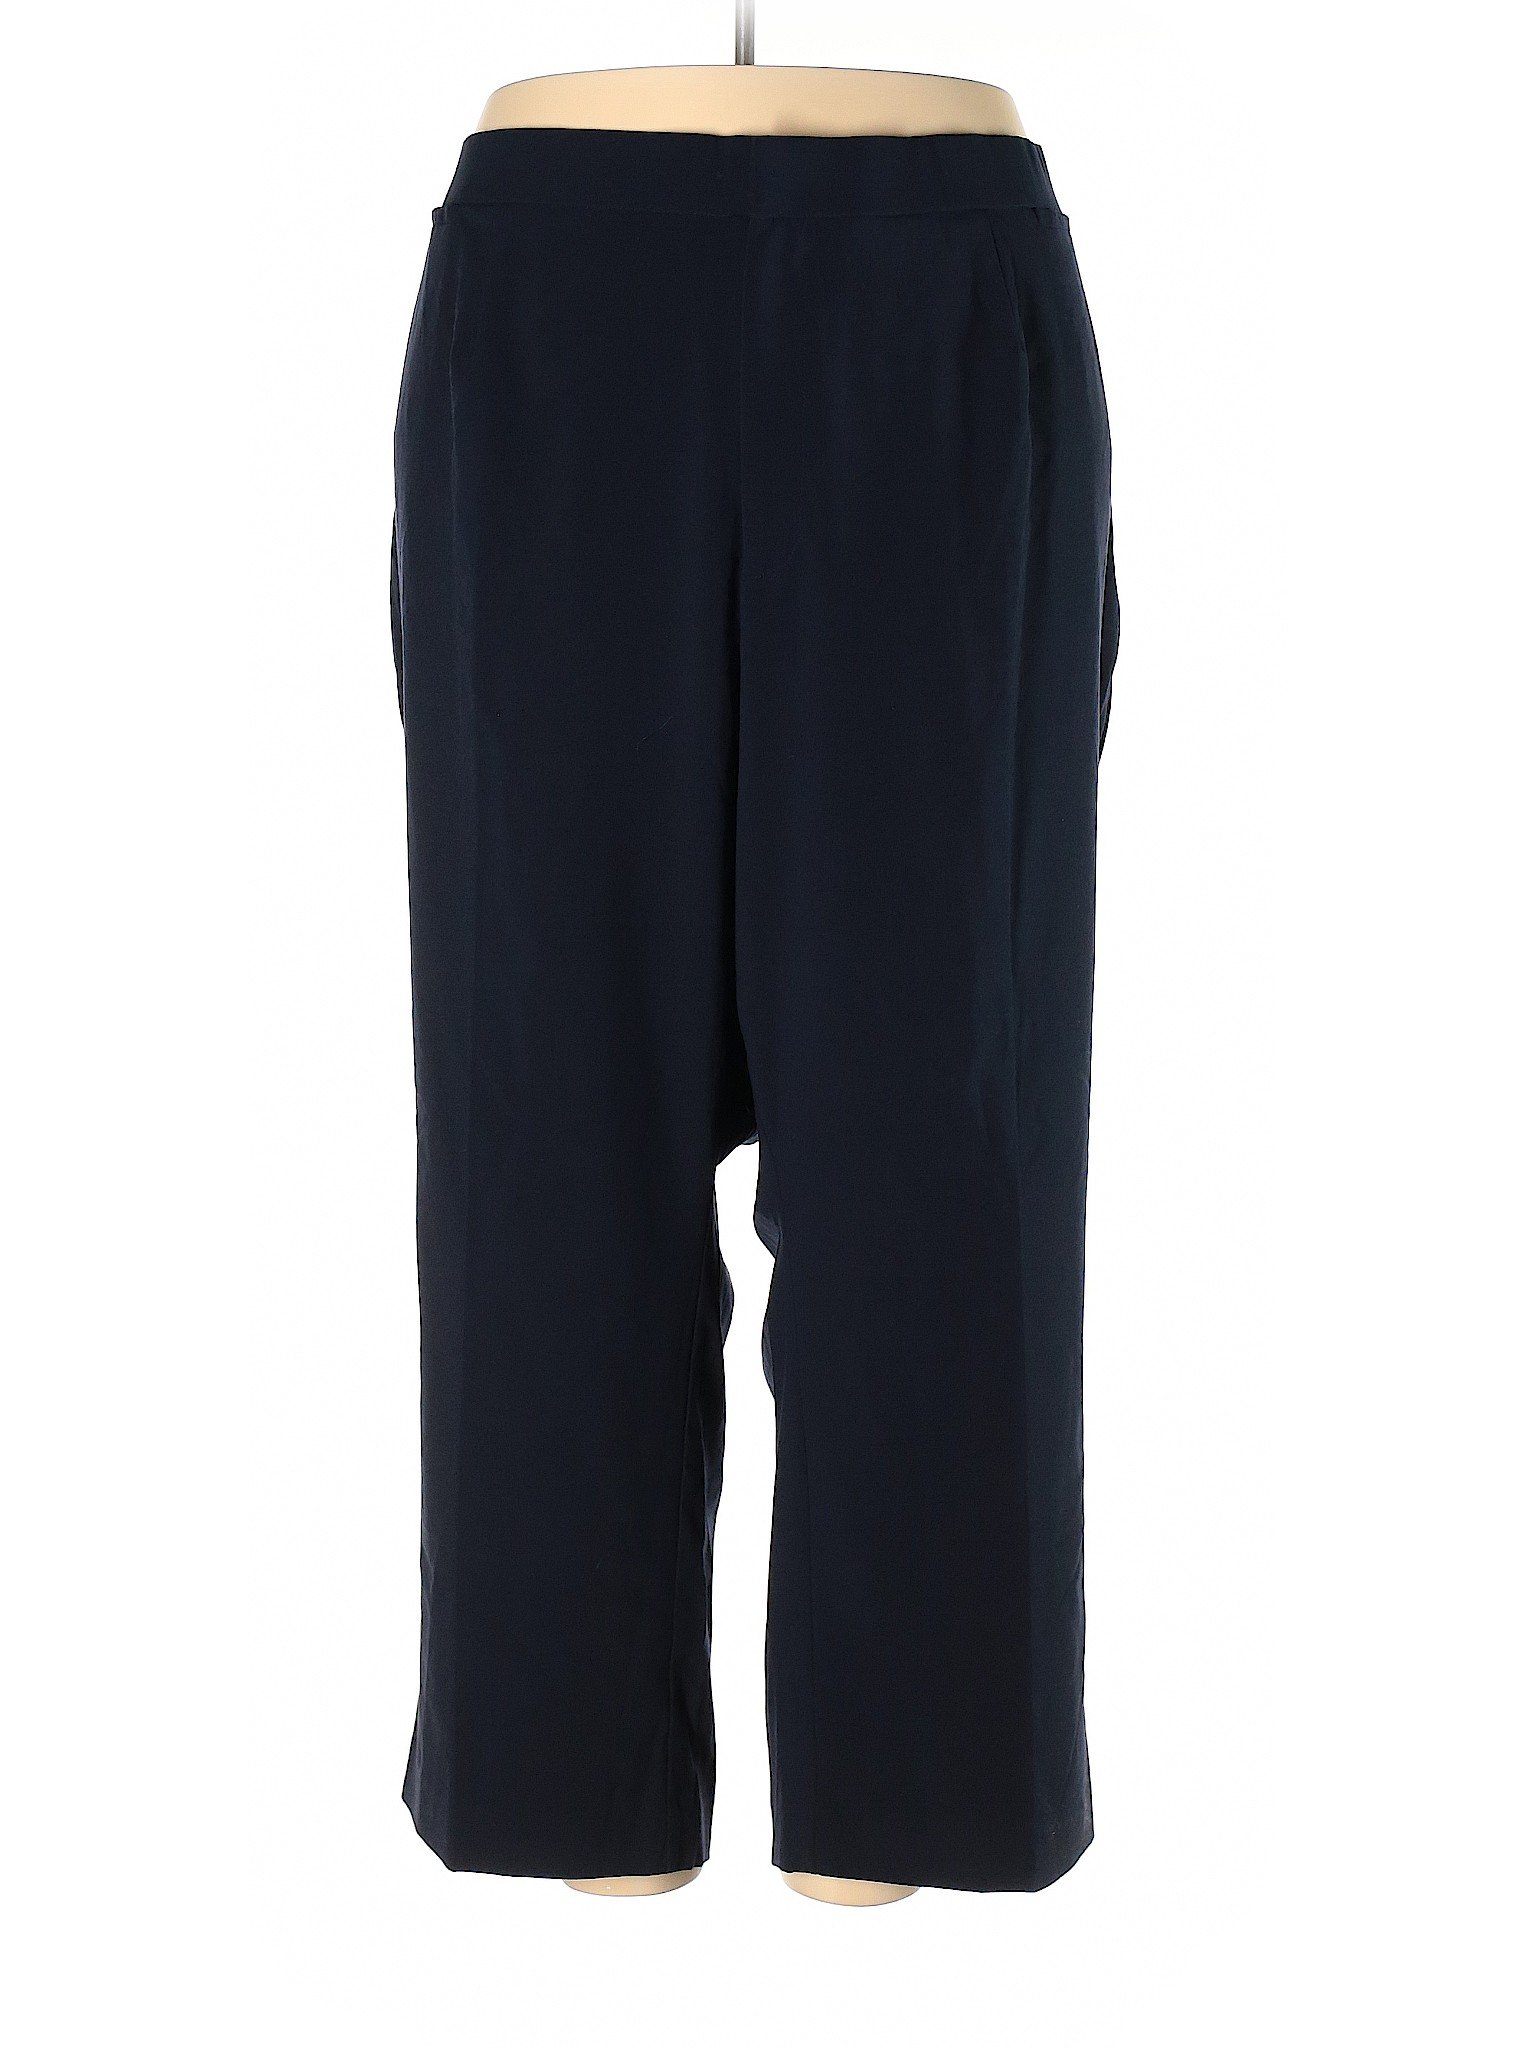 Catherines Women Black Dress Pants 32 Plus | eBay